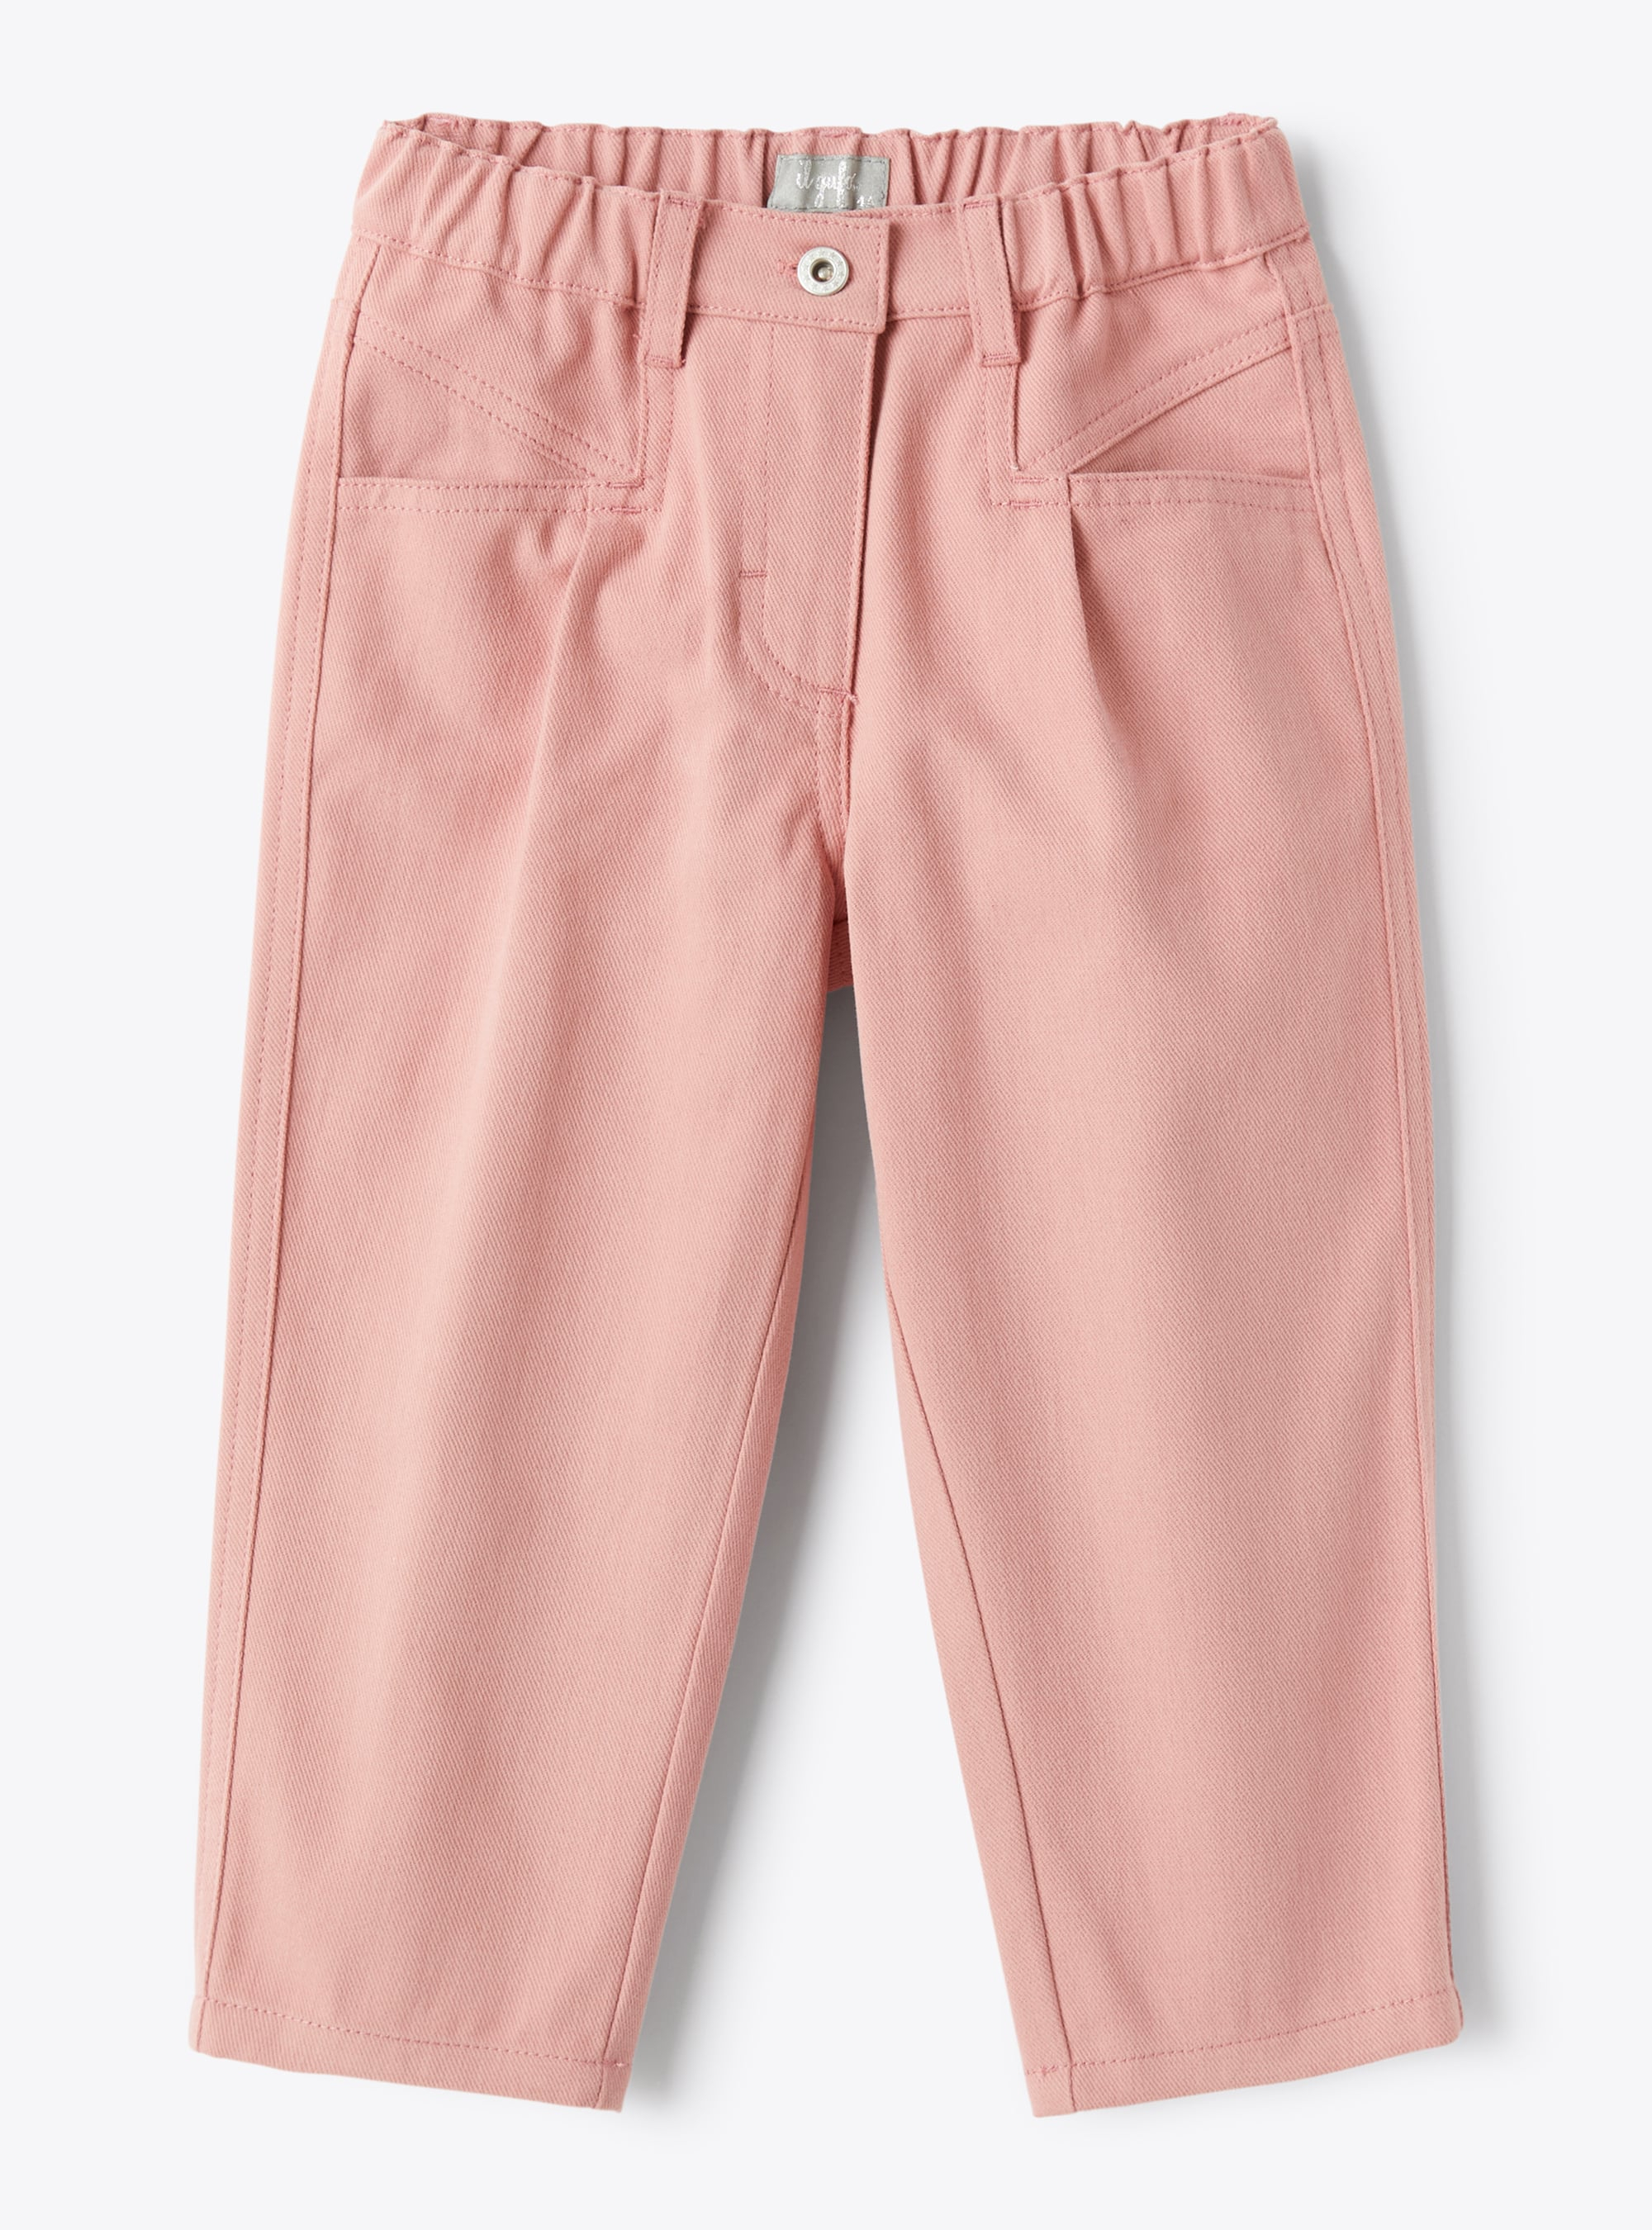 Carrot-cut trousers in pink bull denim - Trousers - Il Gufo